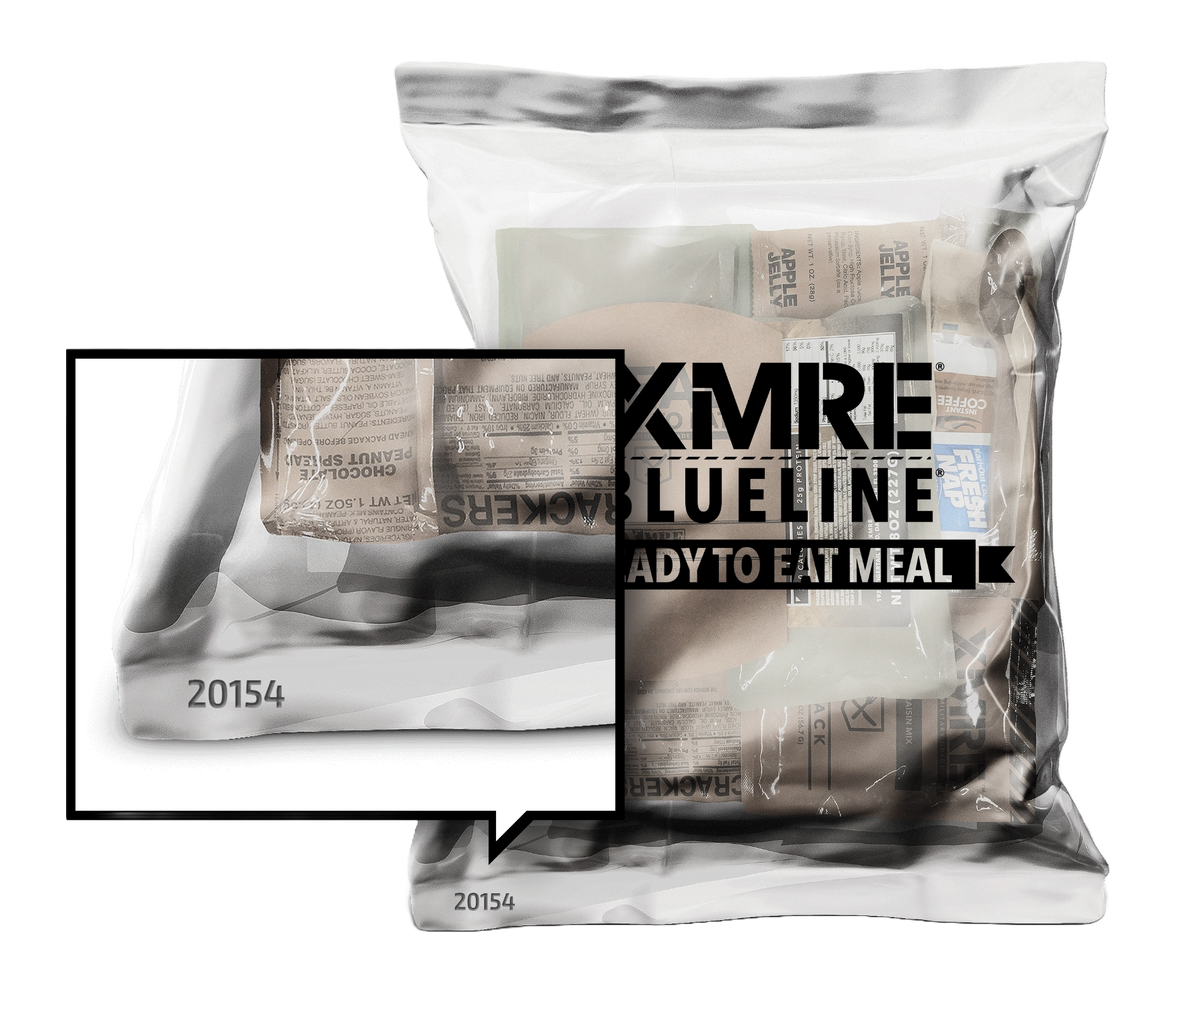 XMRE BLUELINE – CASE OF 12 FRH